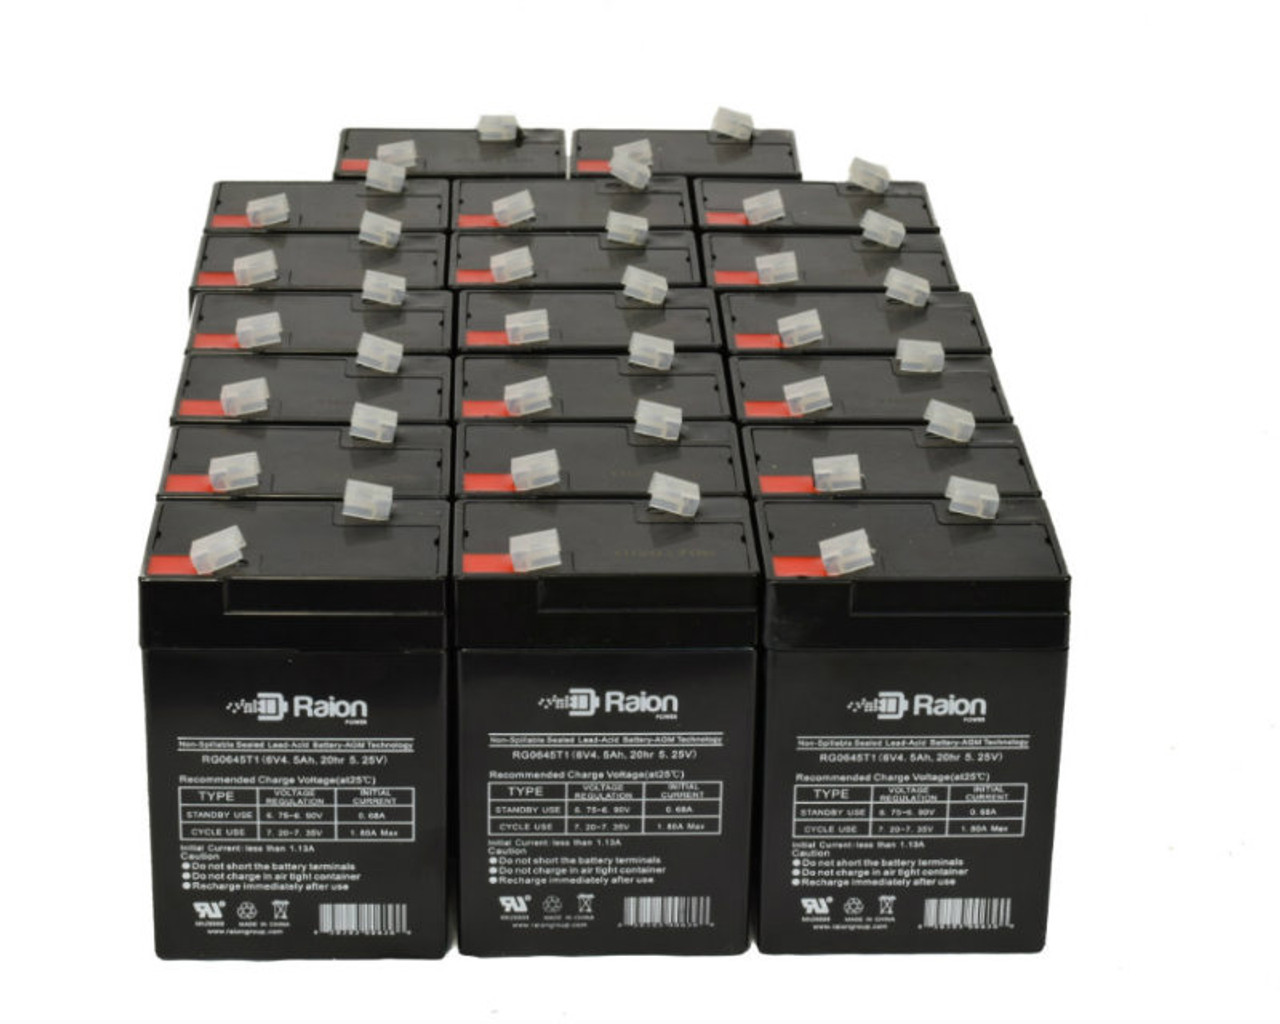 Raion Power 6V 4.5Ah Replacement Emergency Light Battery for Heath-Zenith SL-7001 - 20 Pack